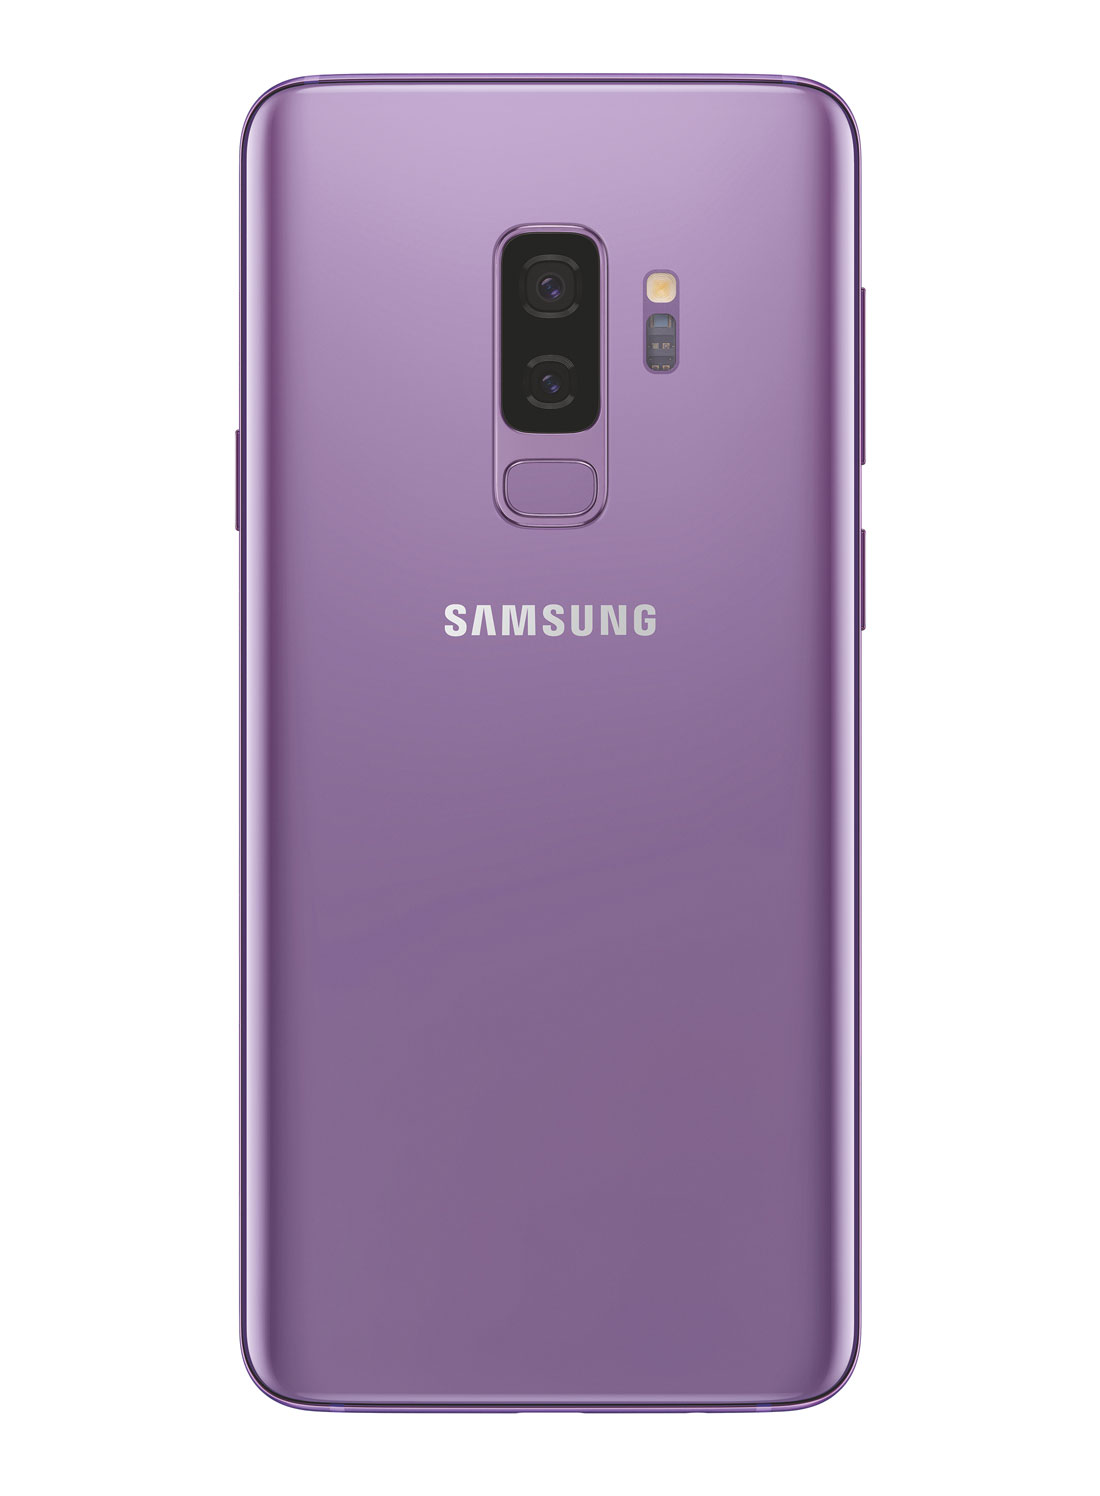 Smartphone Samsung Galaxy S9+.